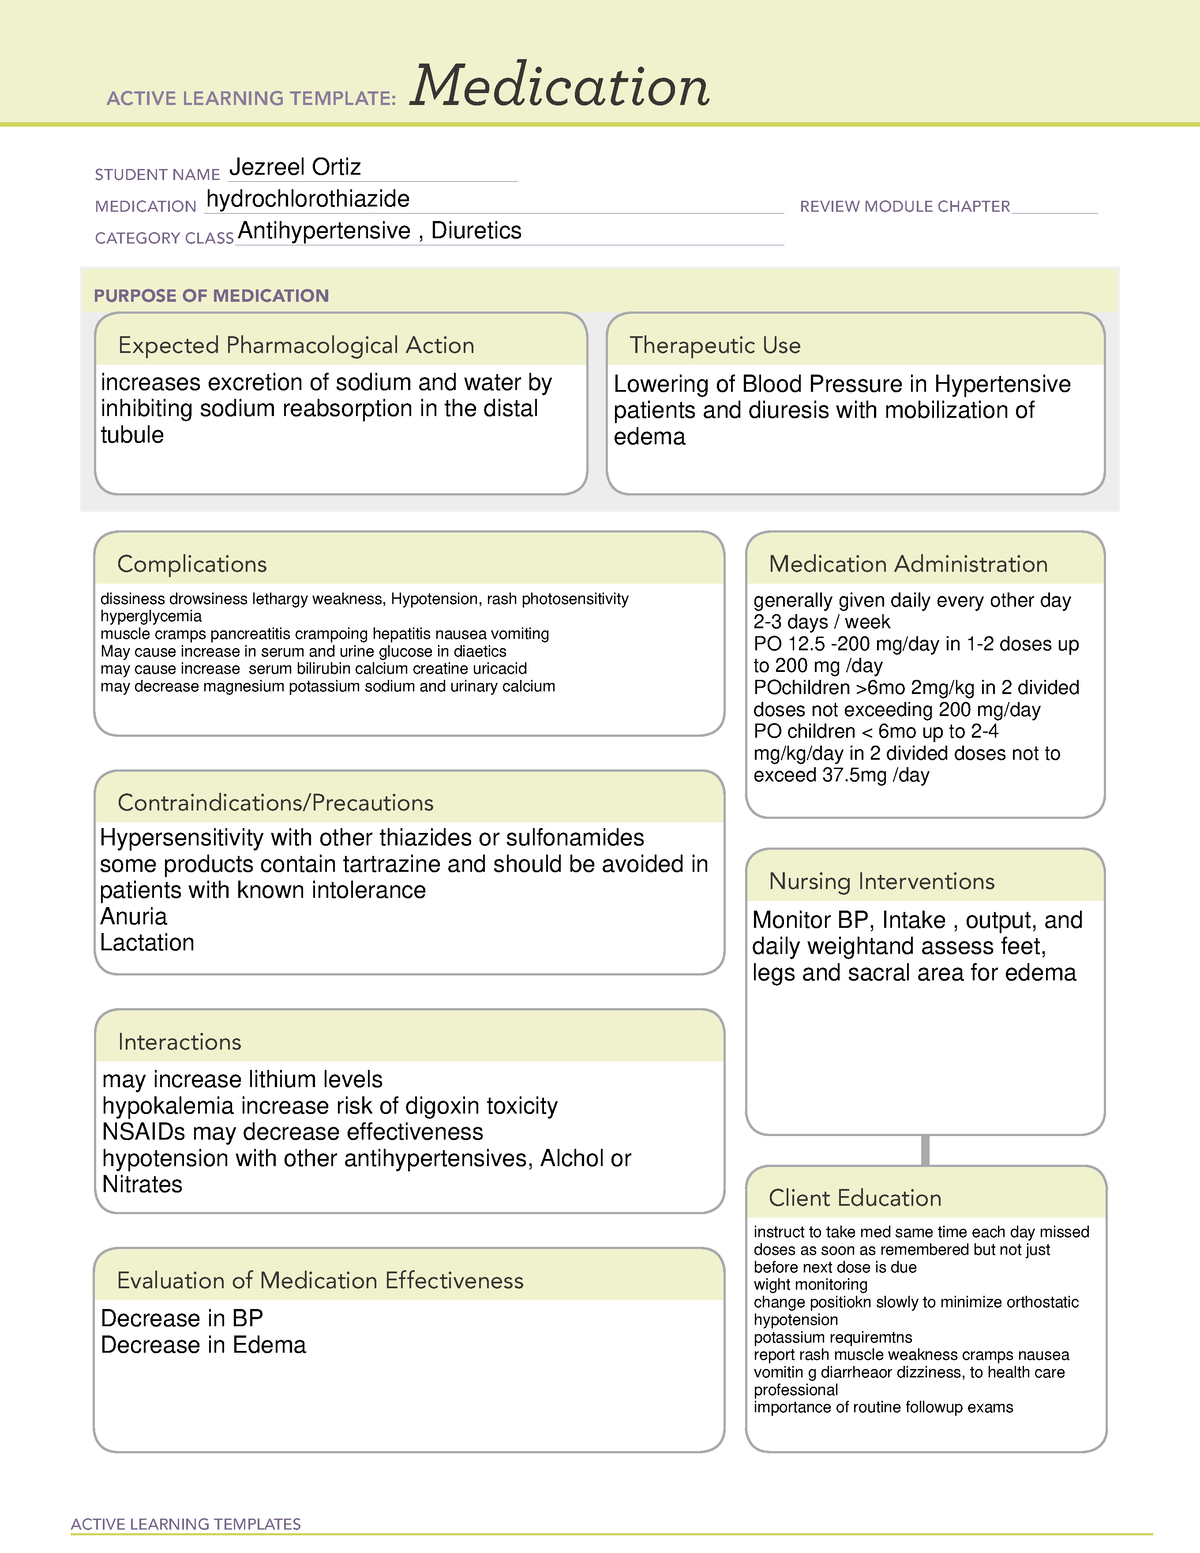 Hydrochlorothiazide - ATI medication template - ACTIVE LEARNING ...